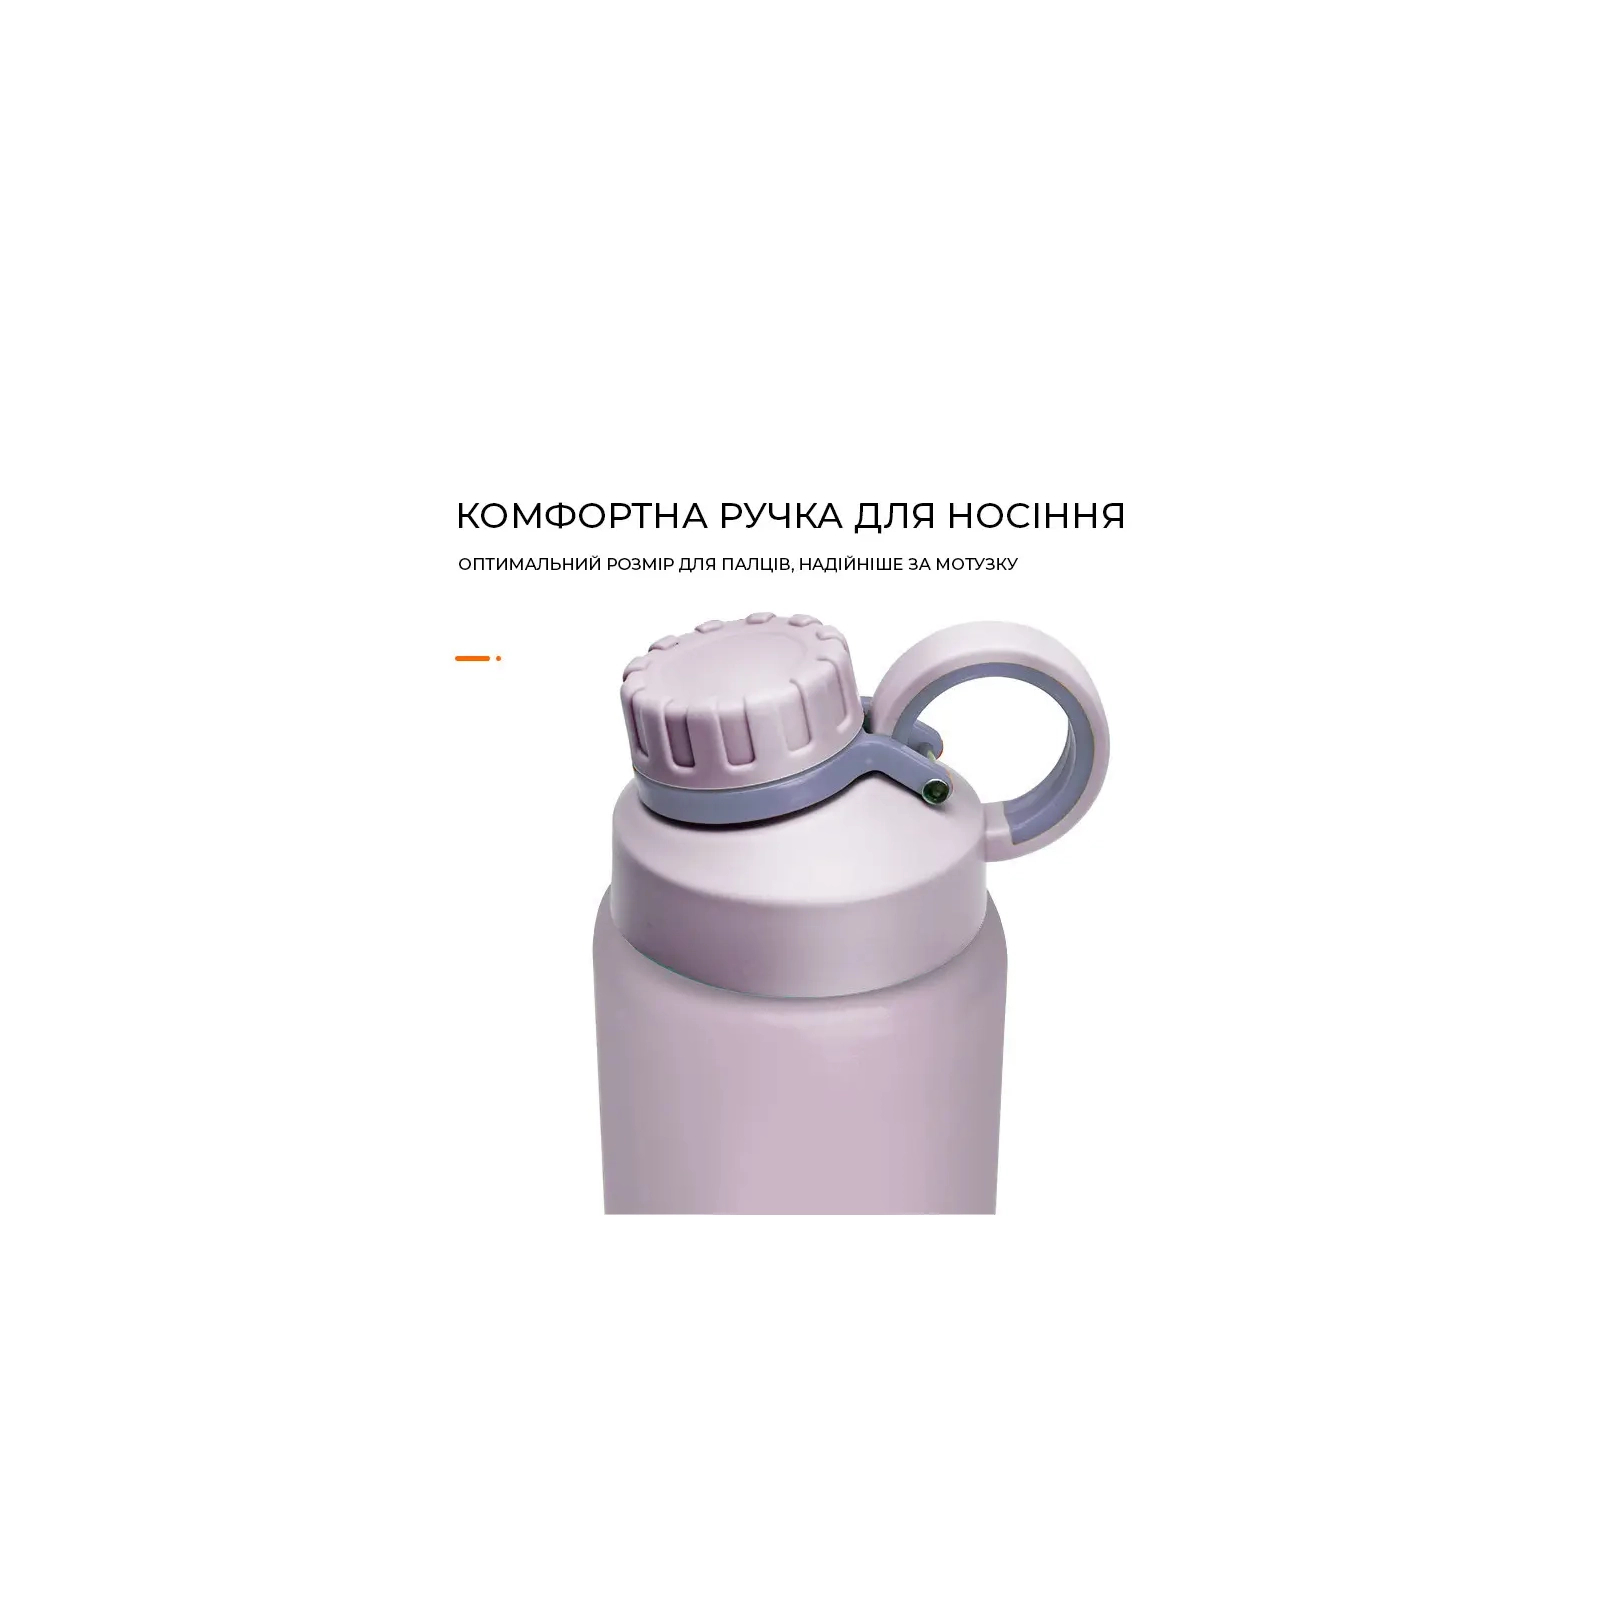 Бутылка для воды Casno 500 мл KXN-1234 Фіолетова (KXN-1234_Purple) изображение 8